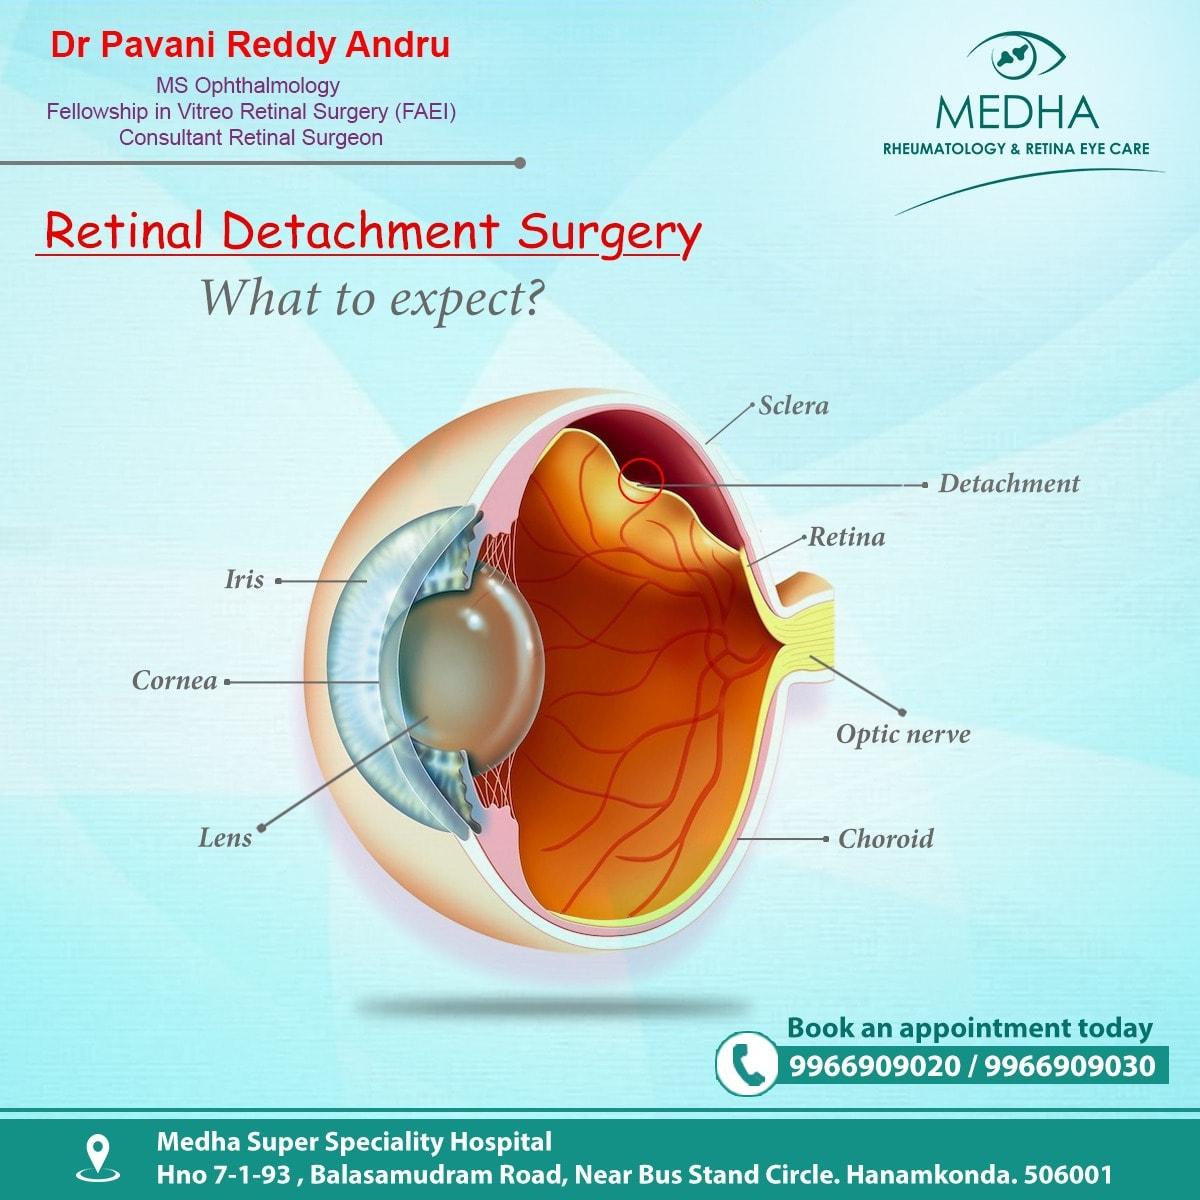 For Better Service, Better Result and Better Vision.. Visit Medha Retina Eye Care Center